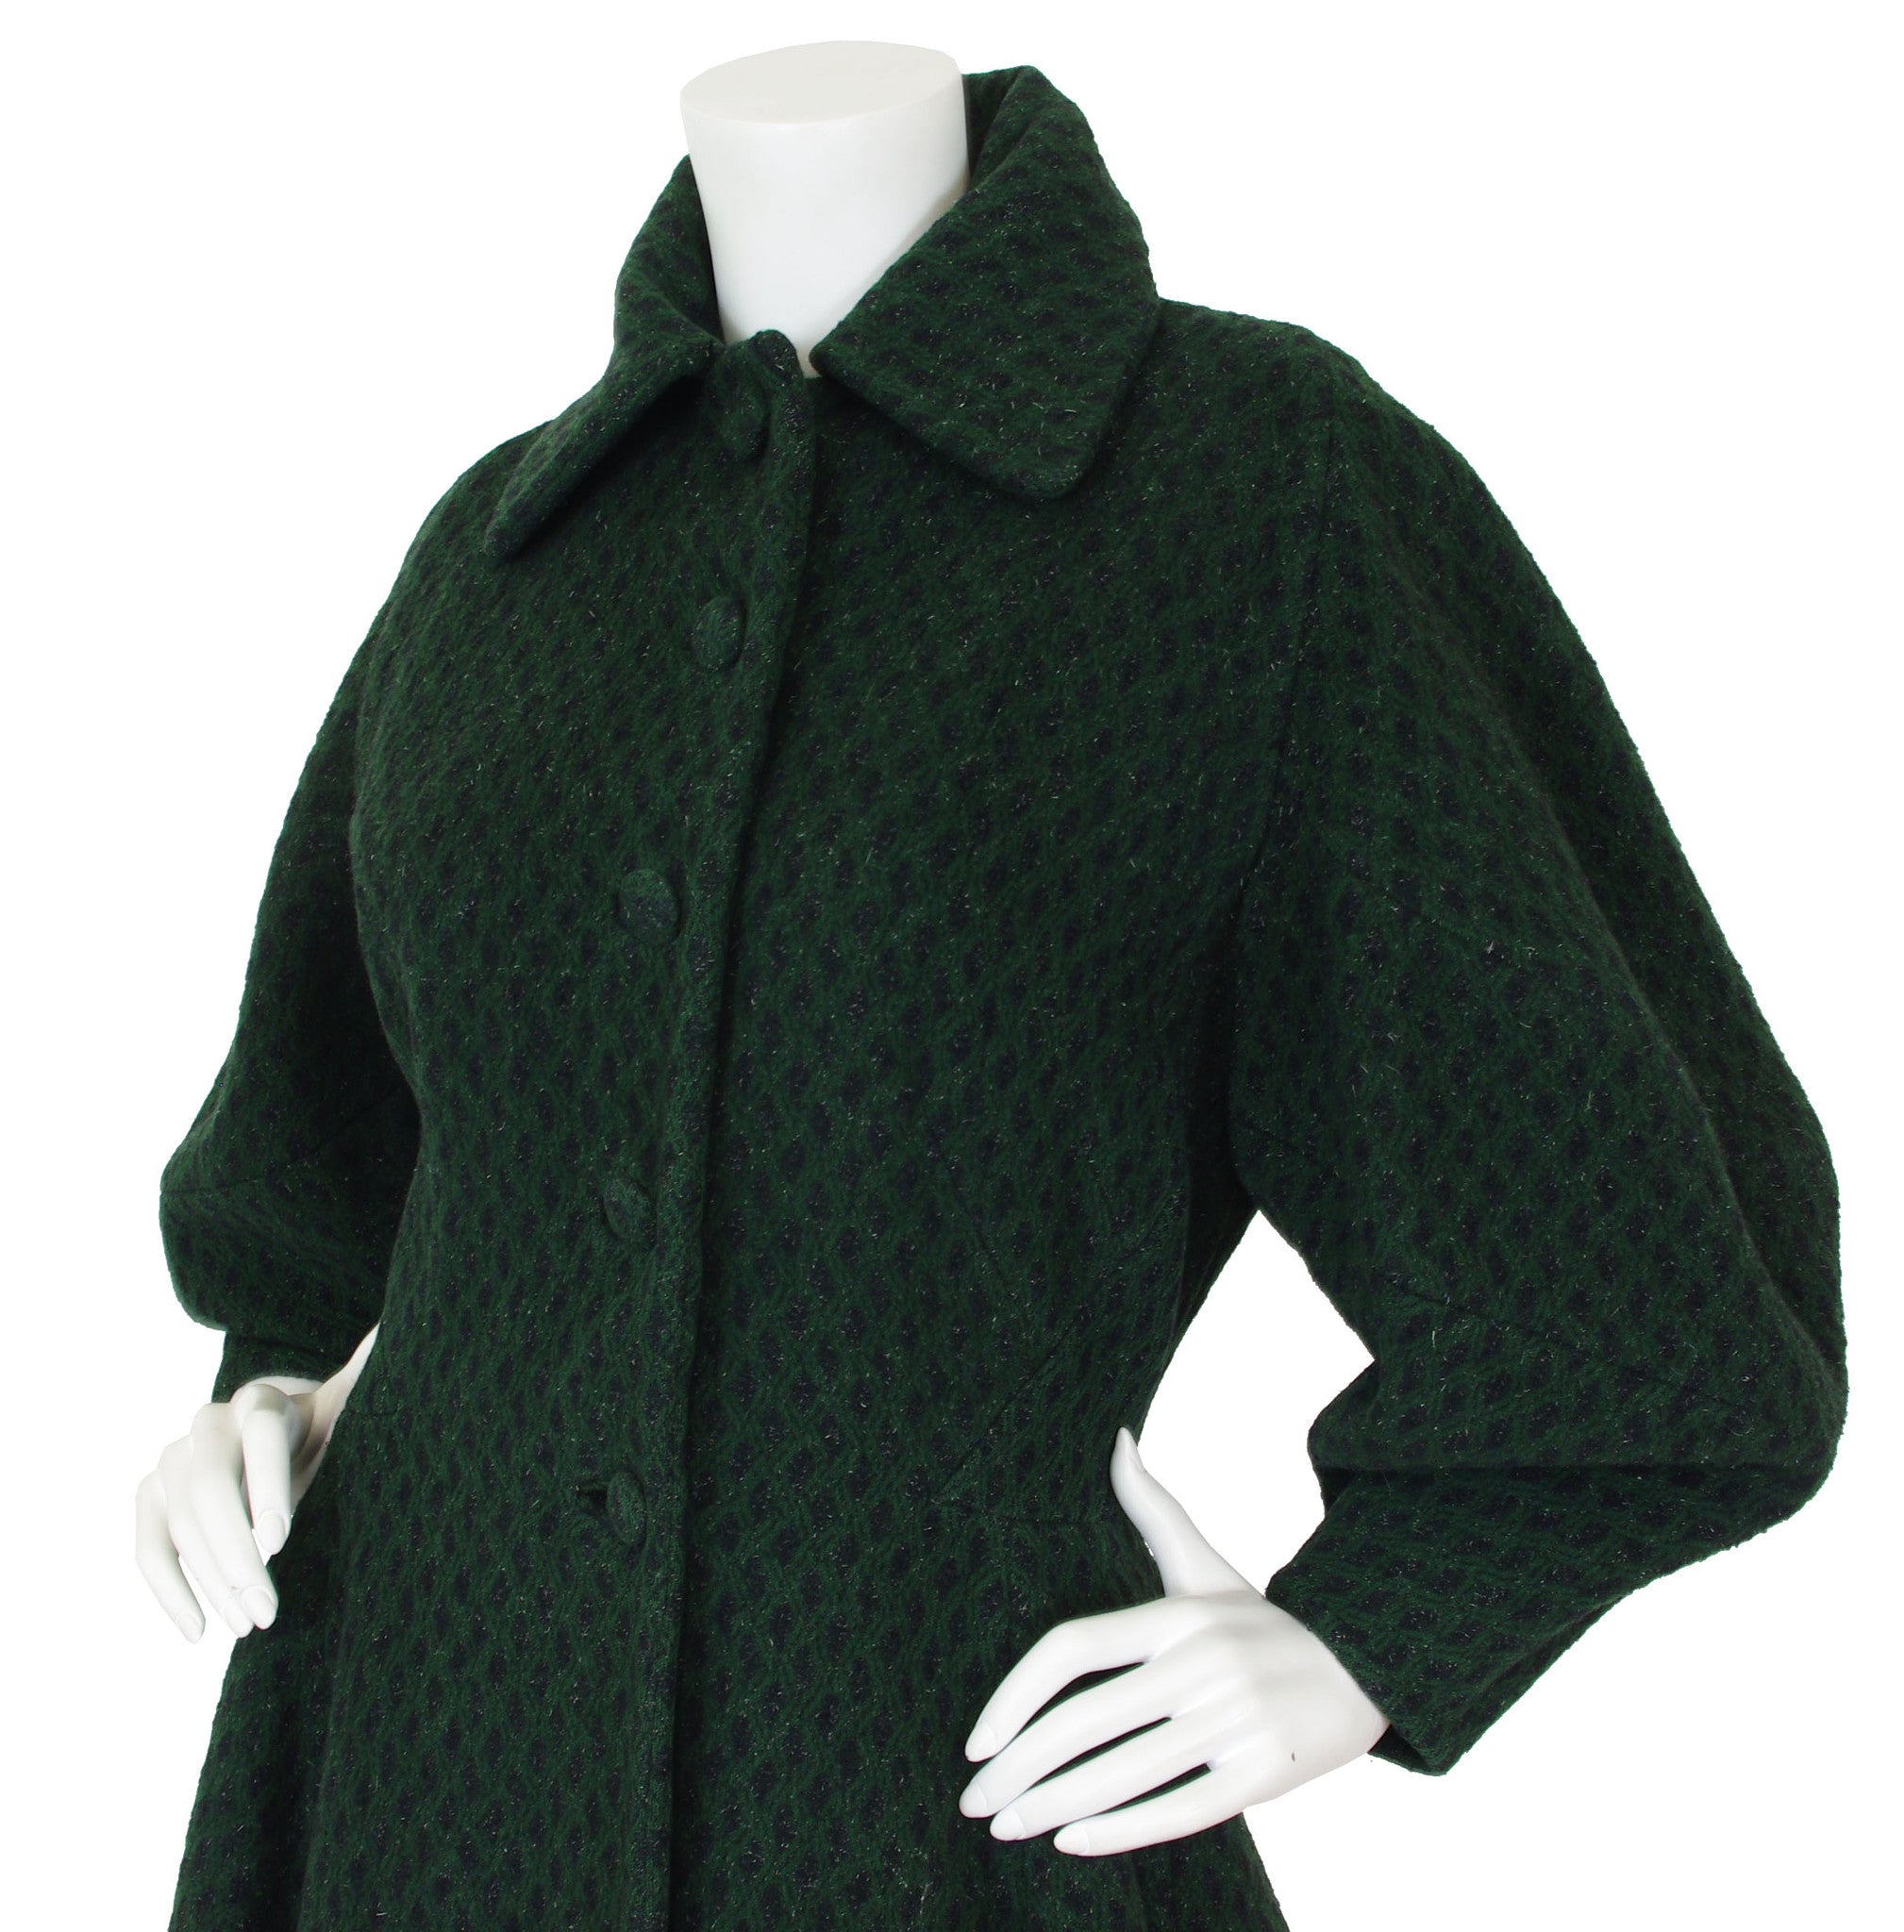 Early 1950's Iconic Lantern Sleeve Dark Green Wool Coat